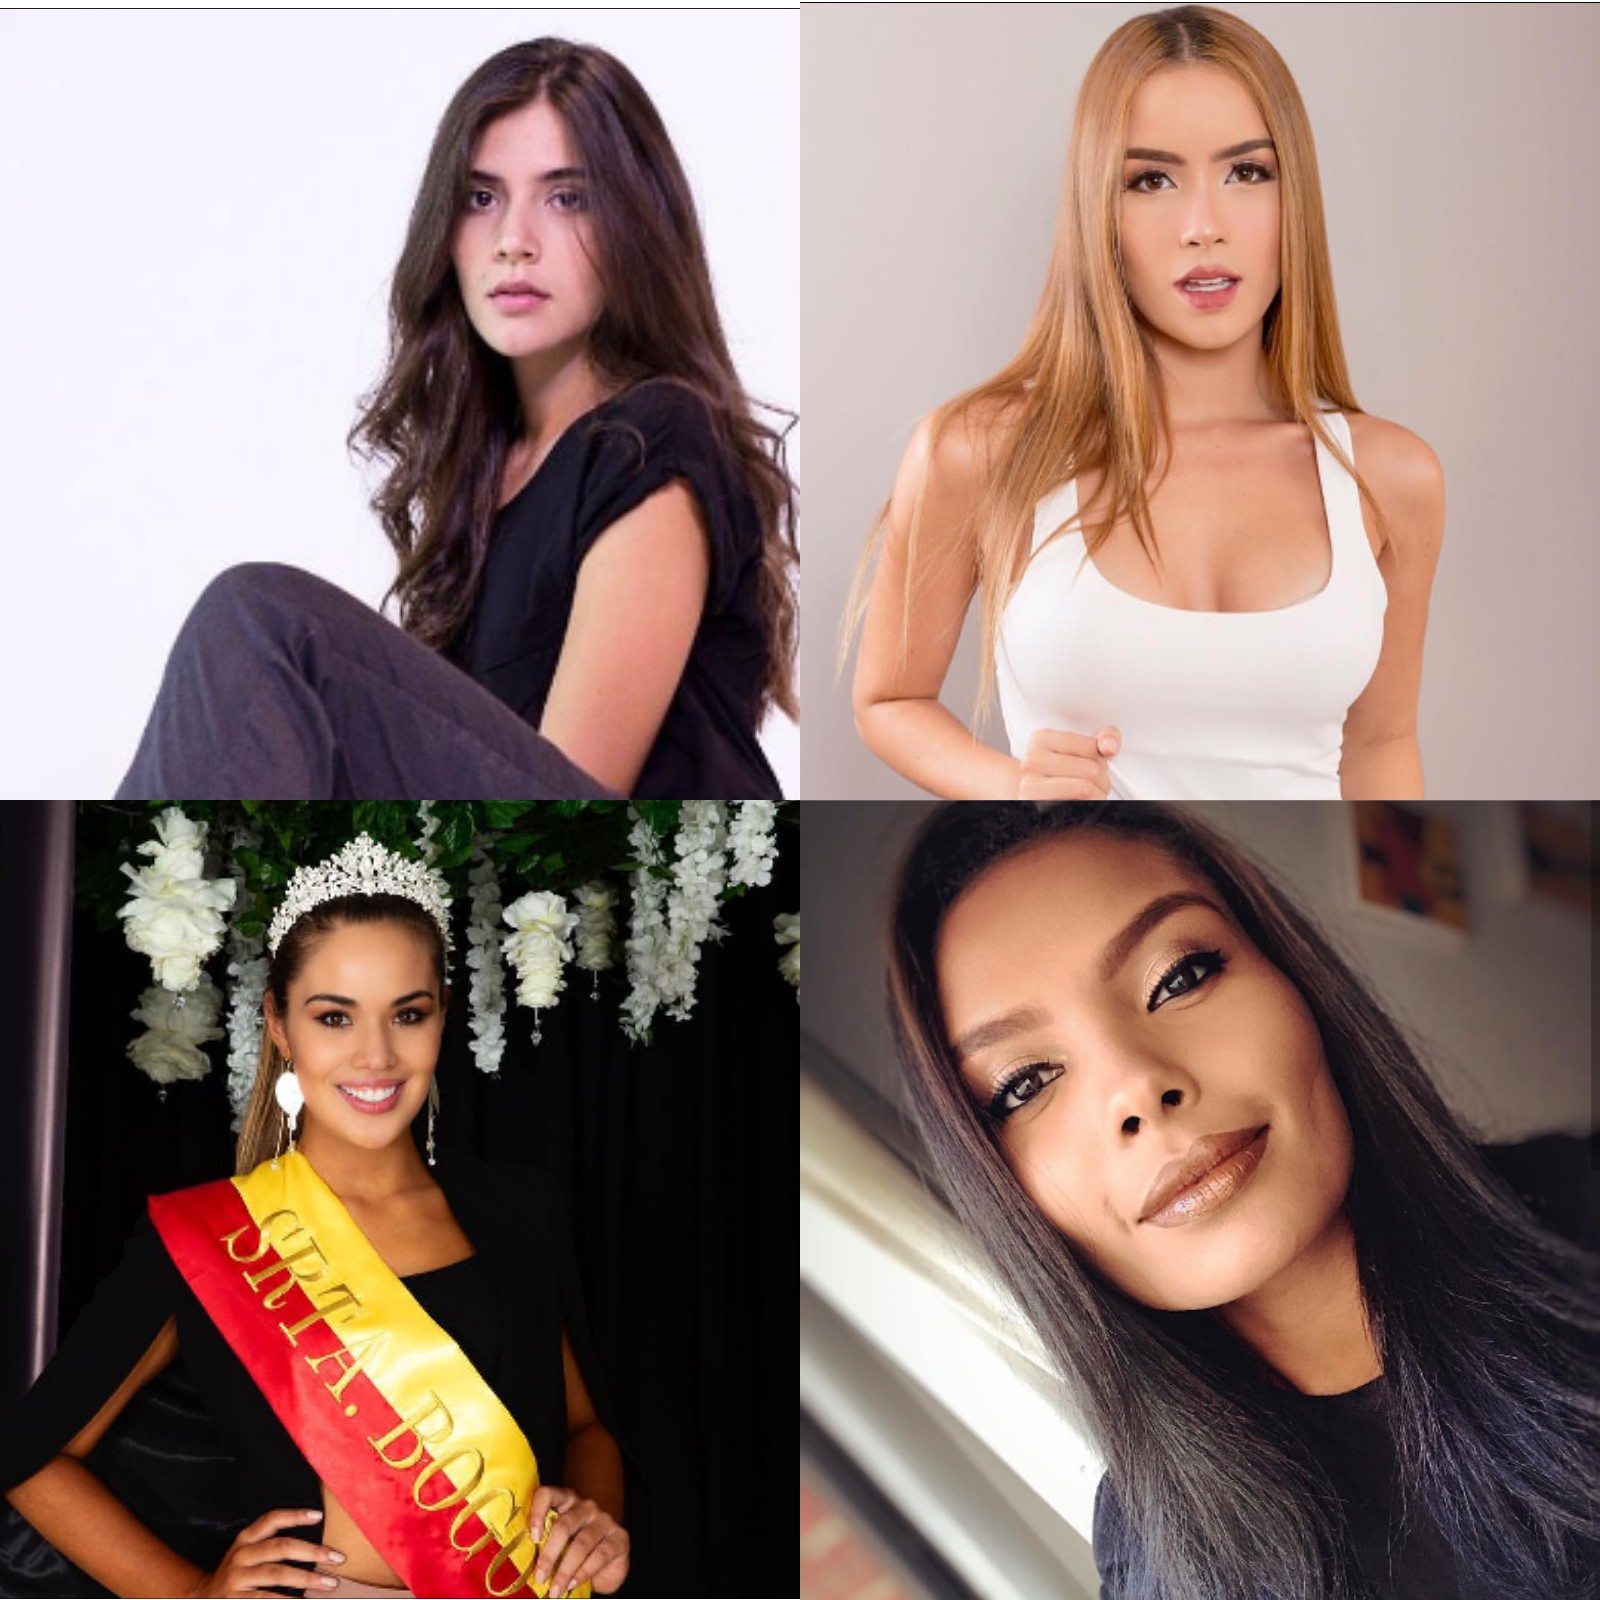 Tercera entrega de candidatas que competirán en Rumbo a Miss Universo